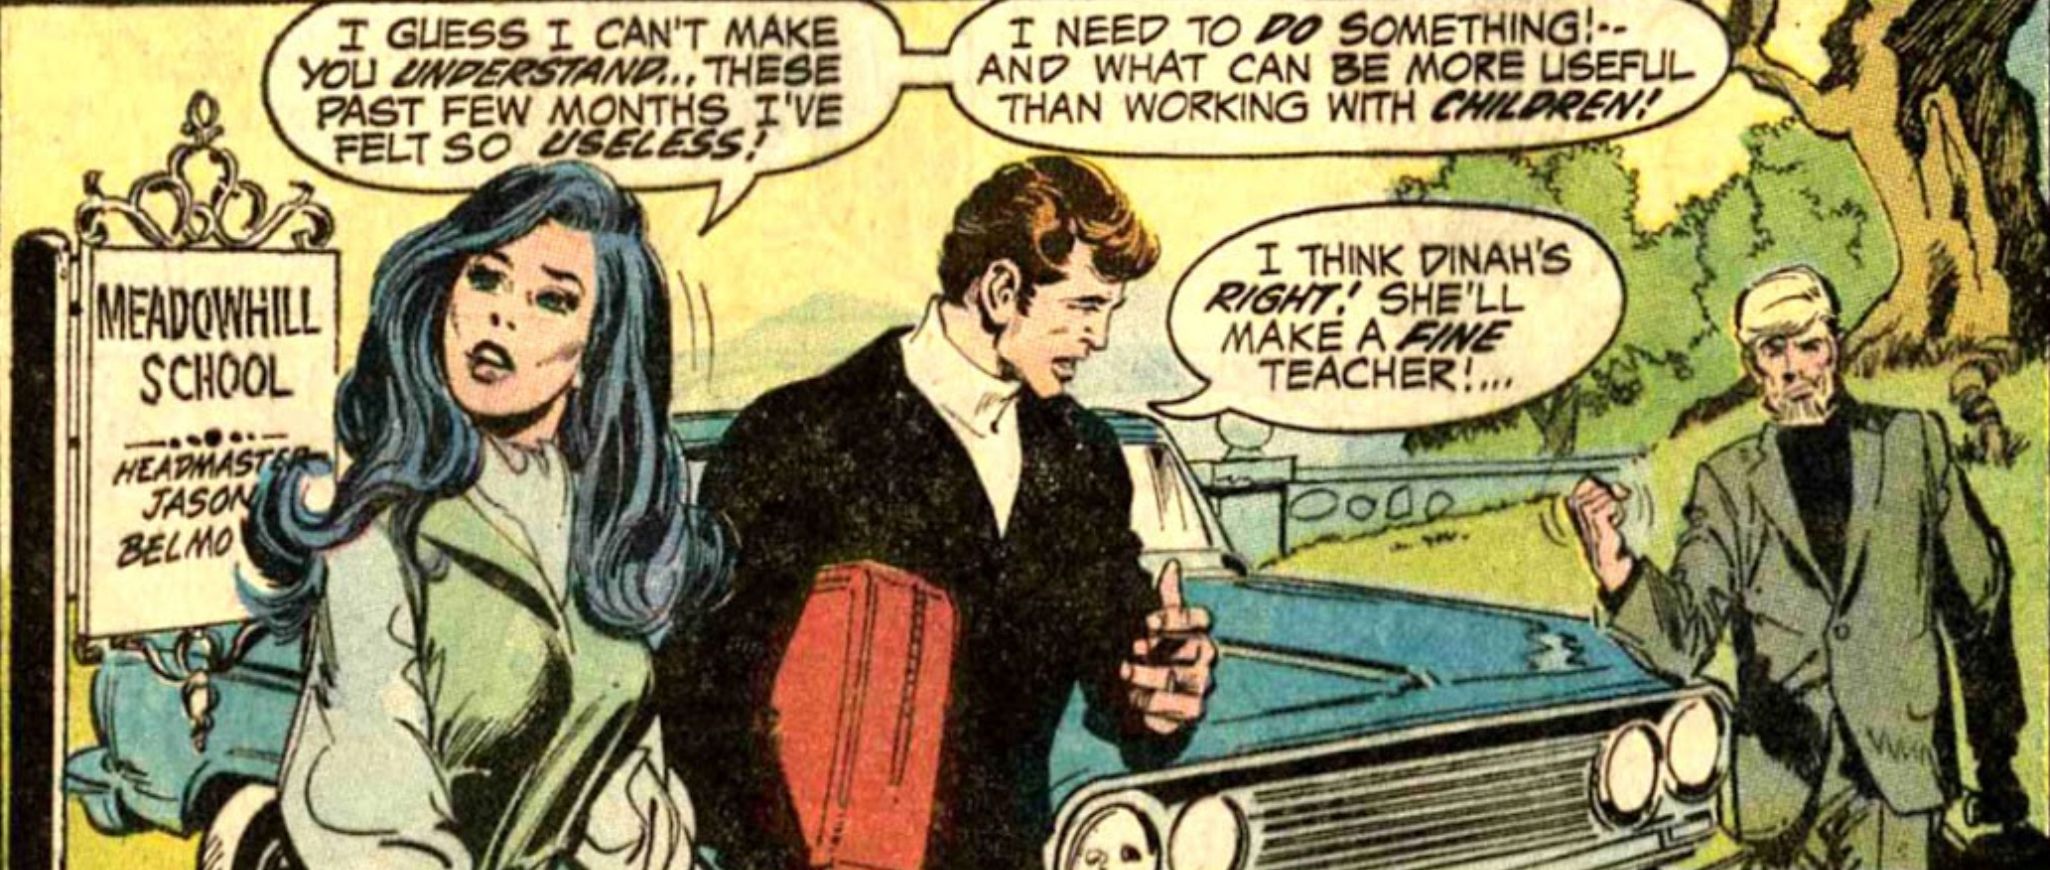 Black Canary Was a Teacher in Green Lantern volume 2 issue 83